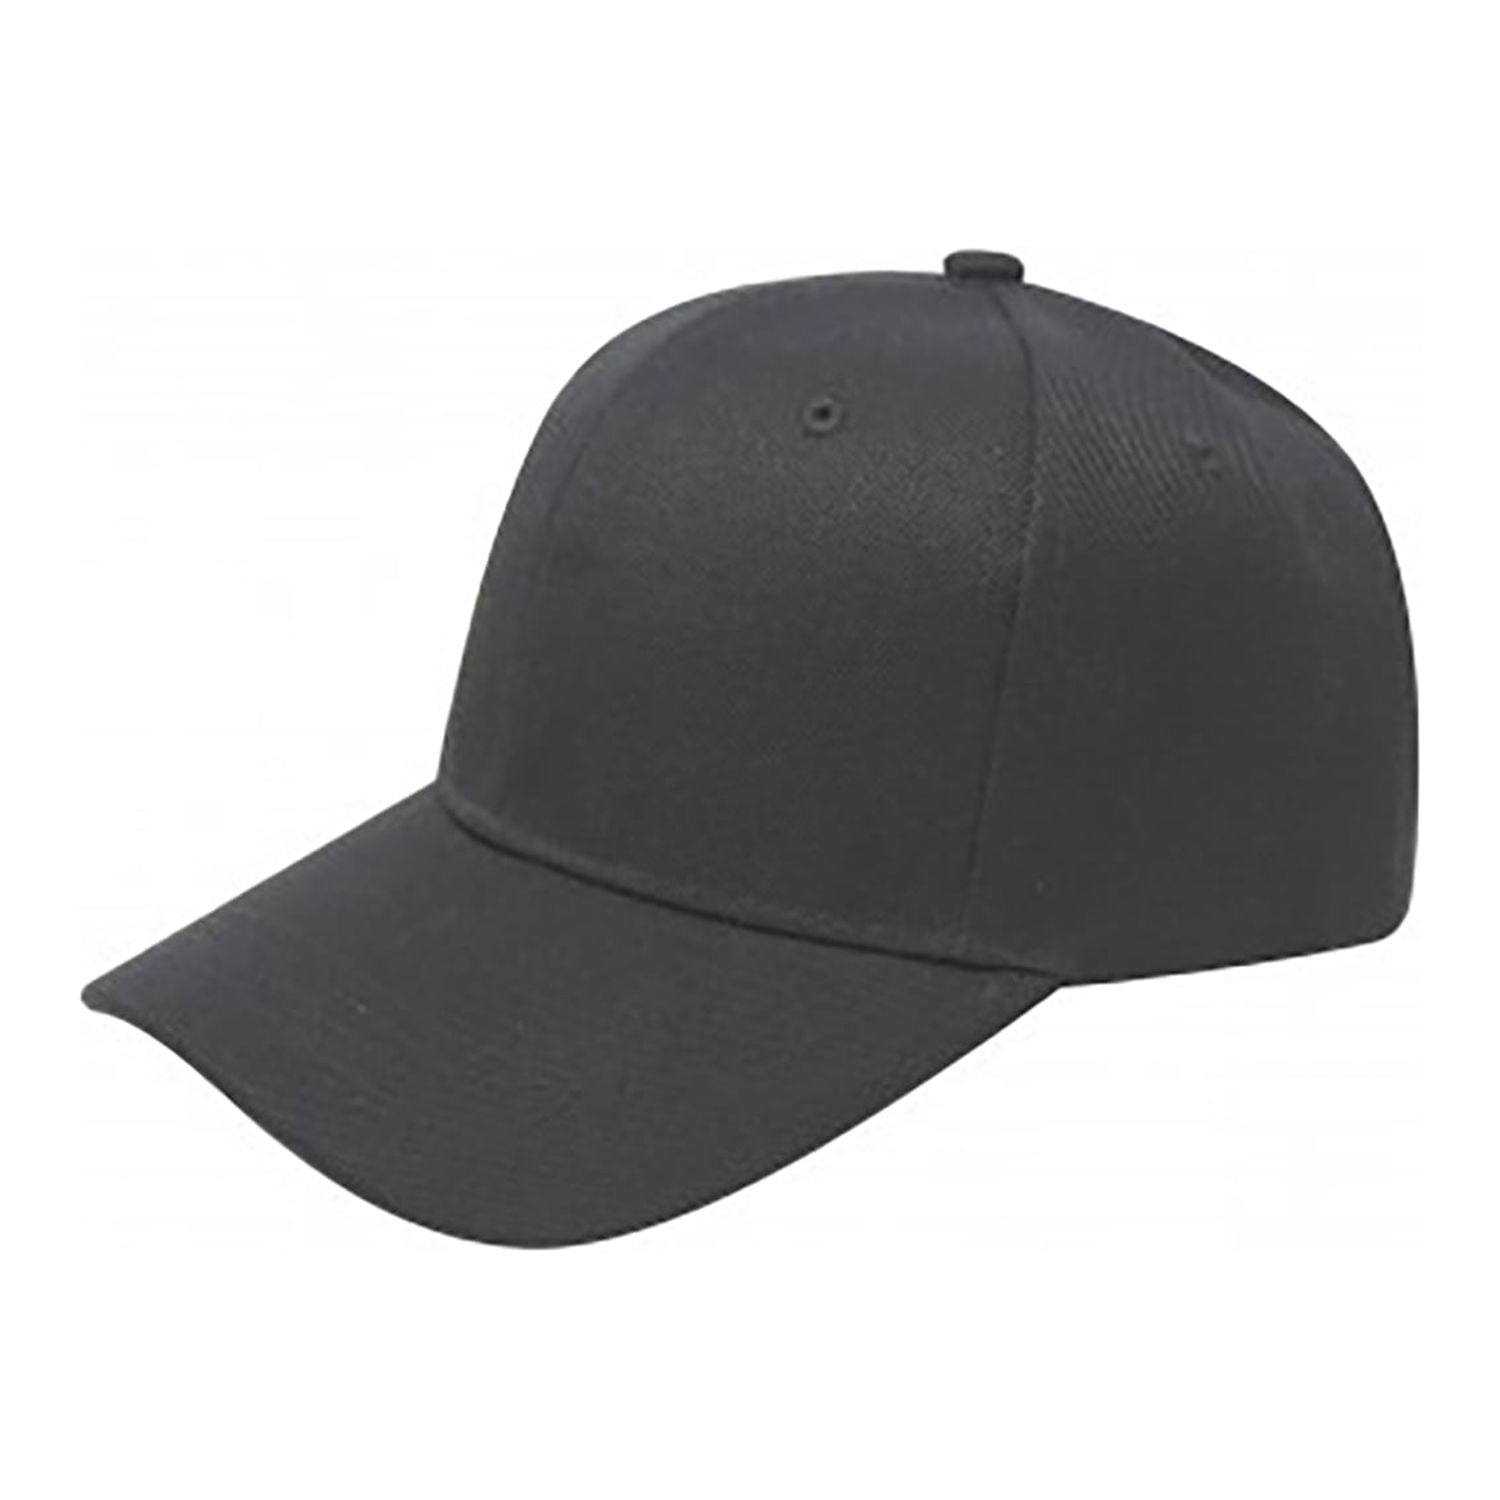 Pack of 15 Bulk Wholesale Plain Baseball Cap Hat Adjustable (Black)